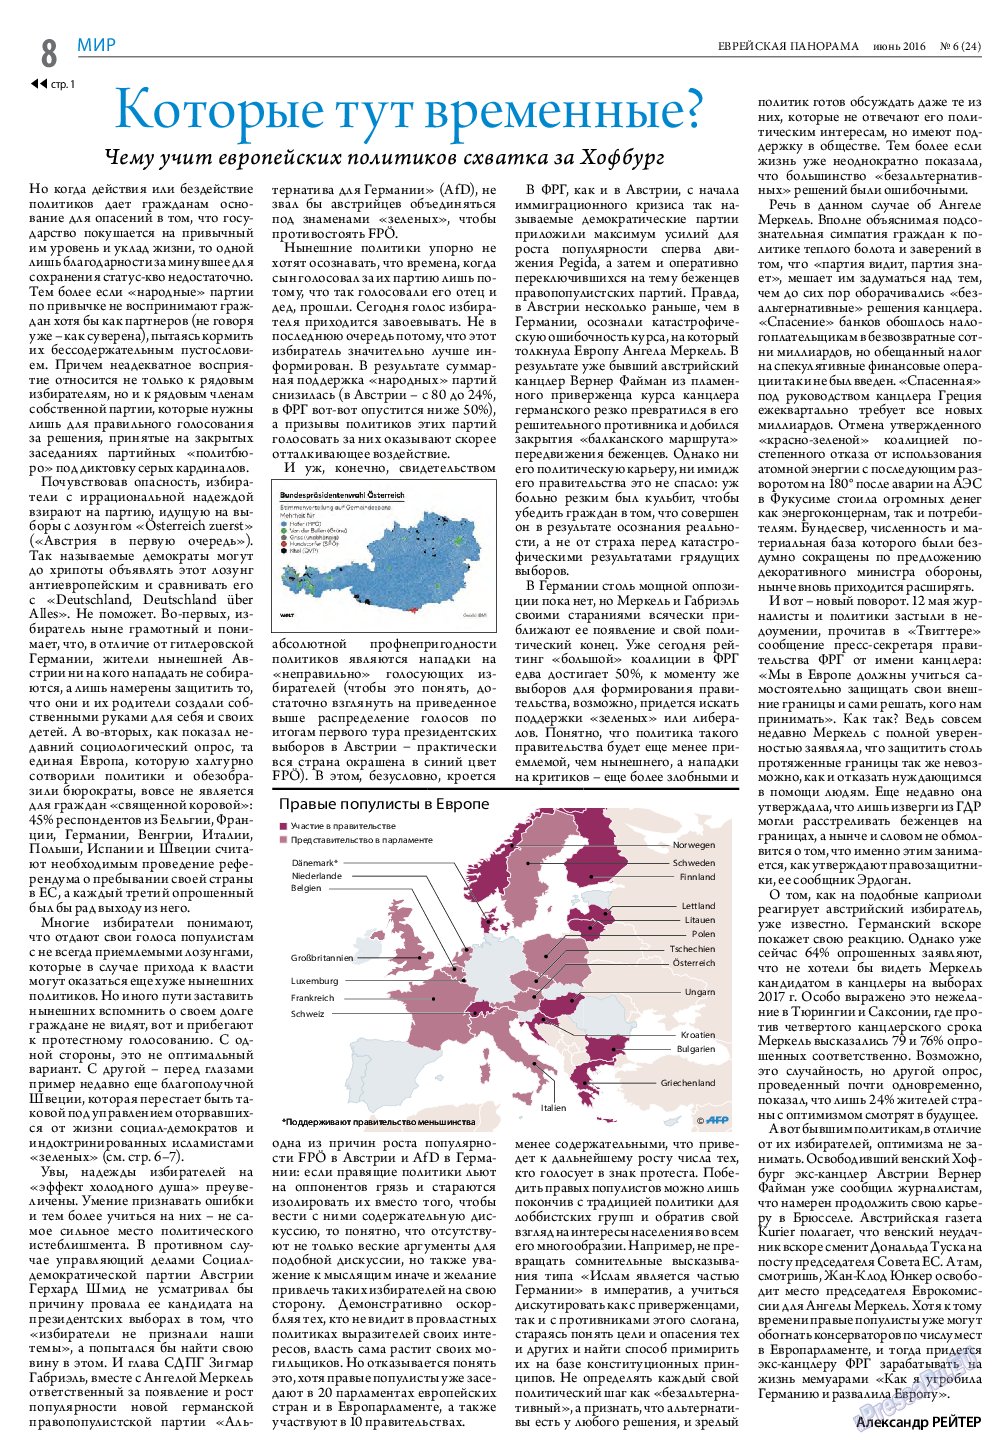 Еврейская панорама, газета. 2016 №6 стр.8